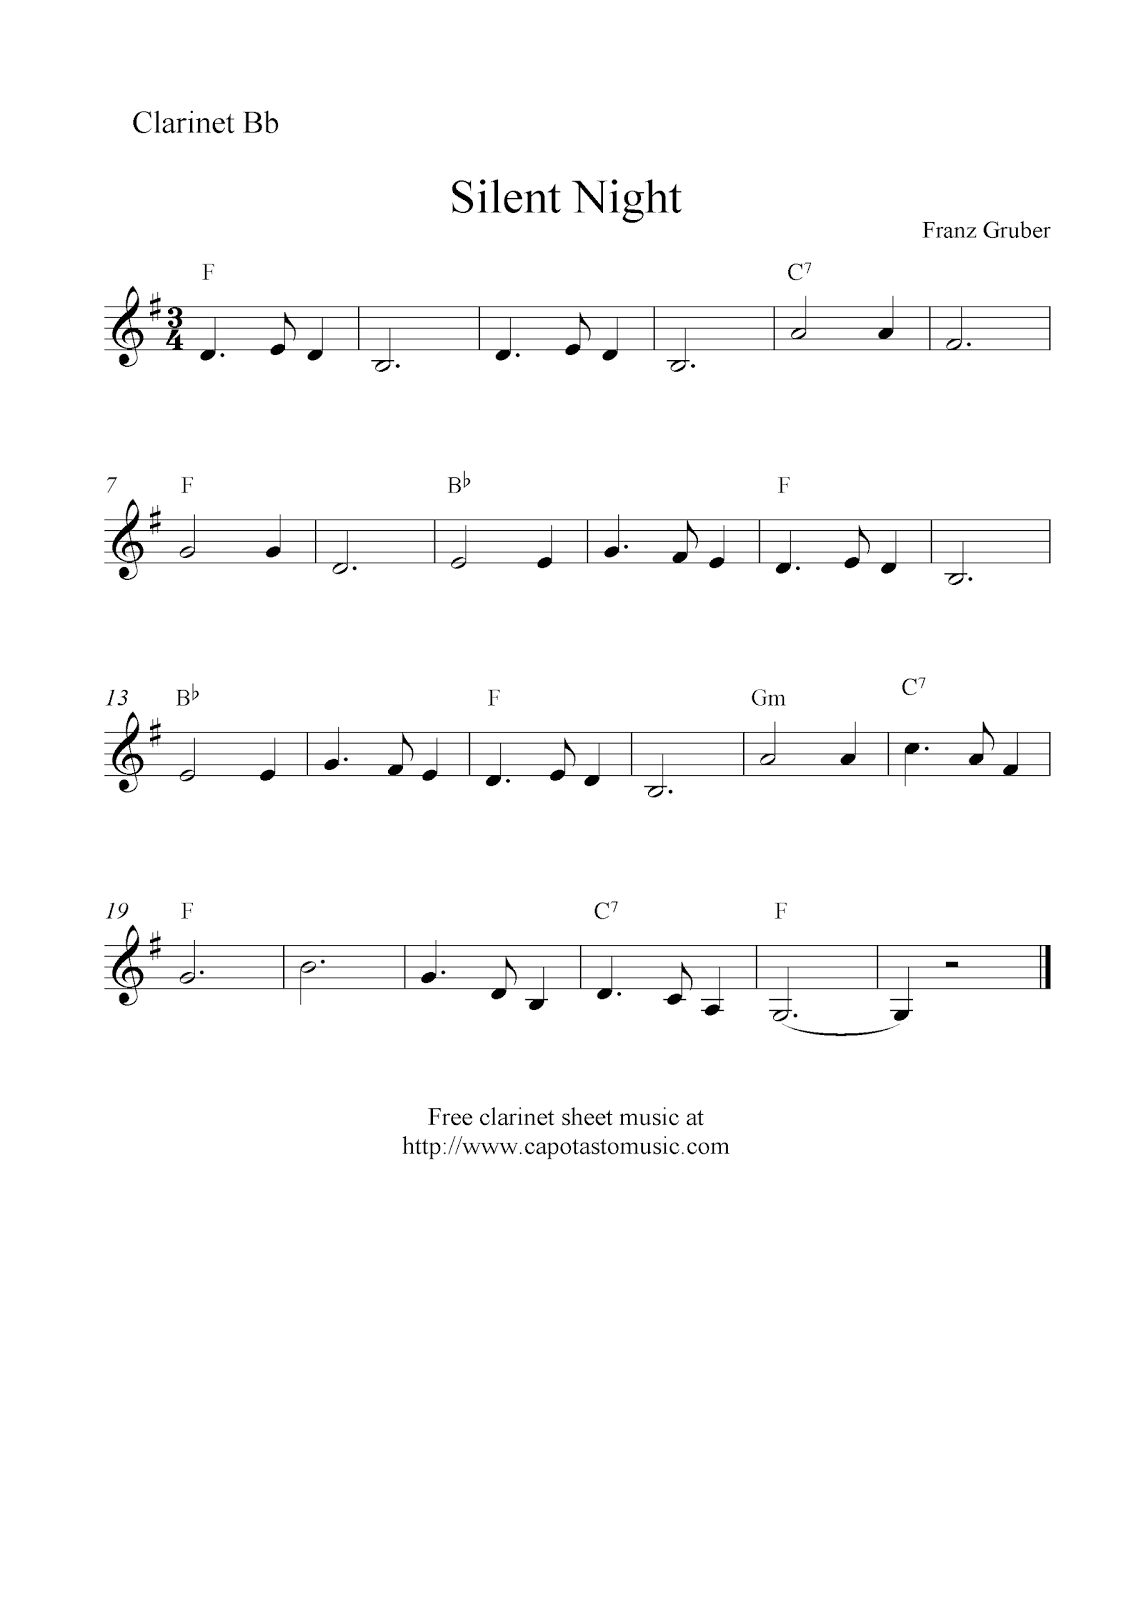 Silent Night, free Christmas clarinet sheet music notes